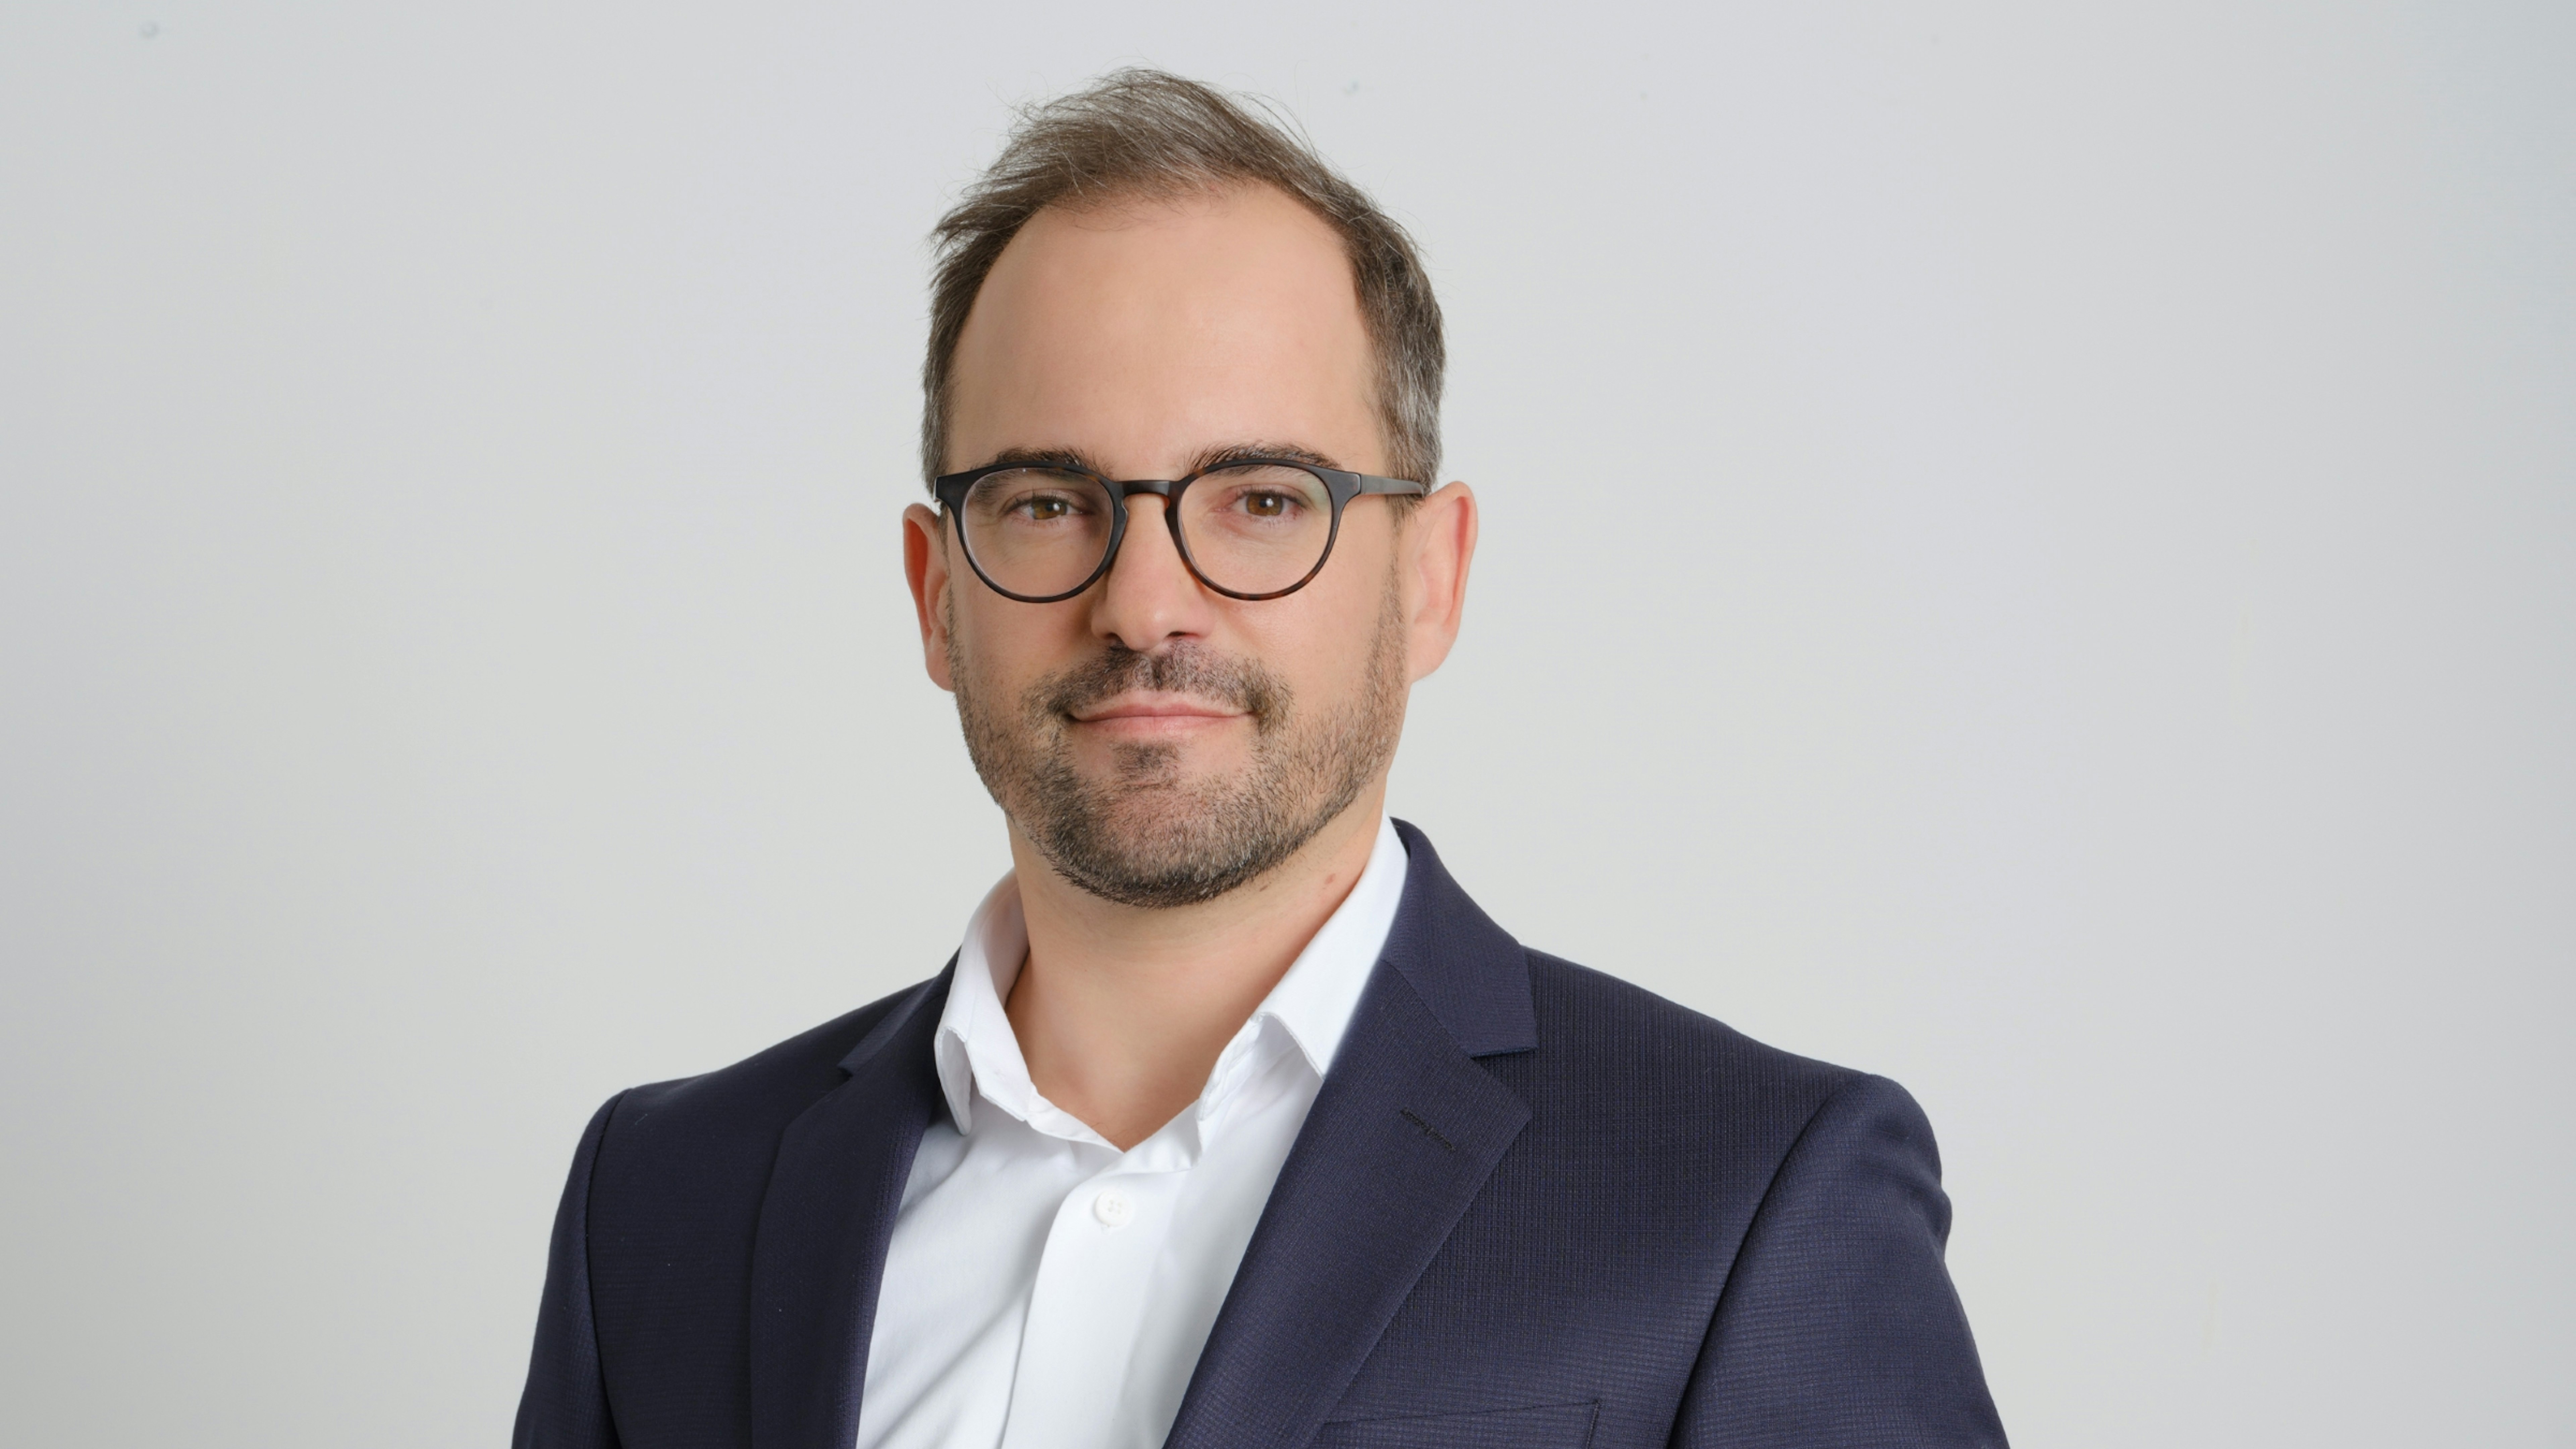 Alexander Spreer, Managing Director of Reimann Investors Asset Management GmbH